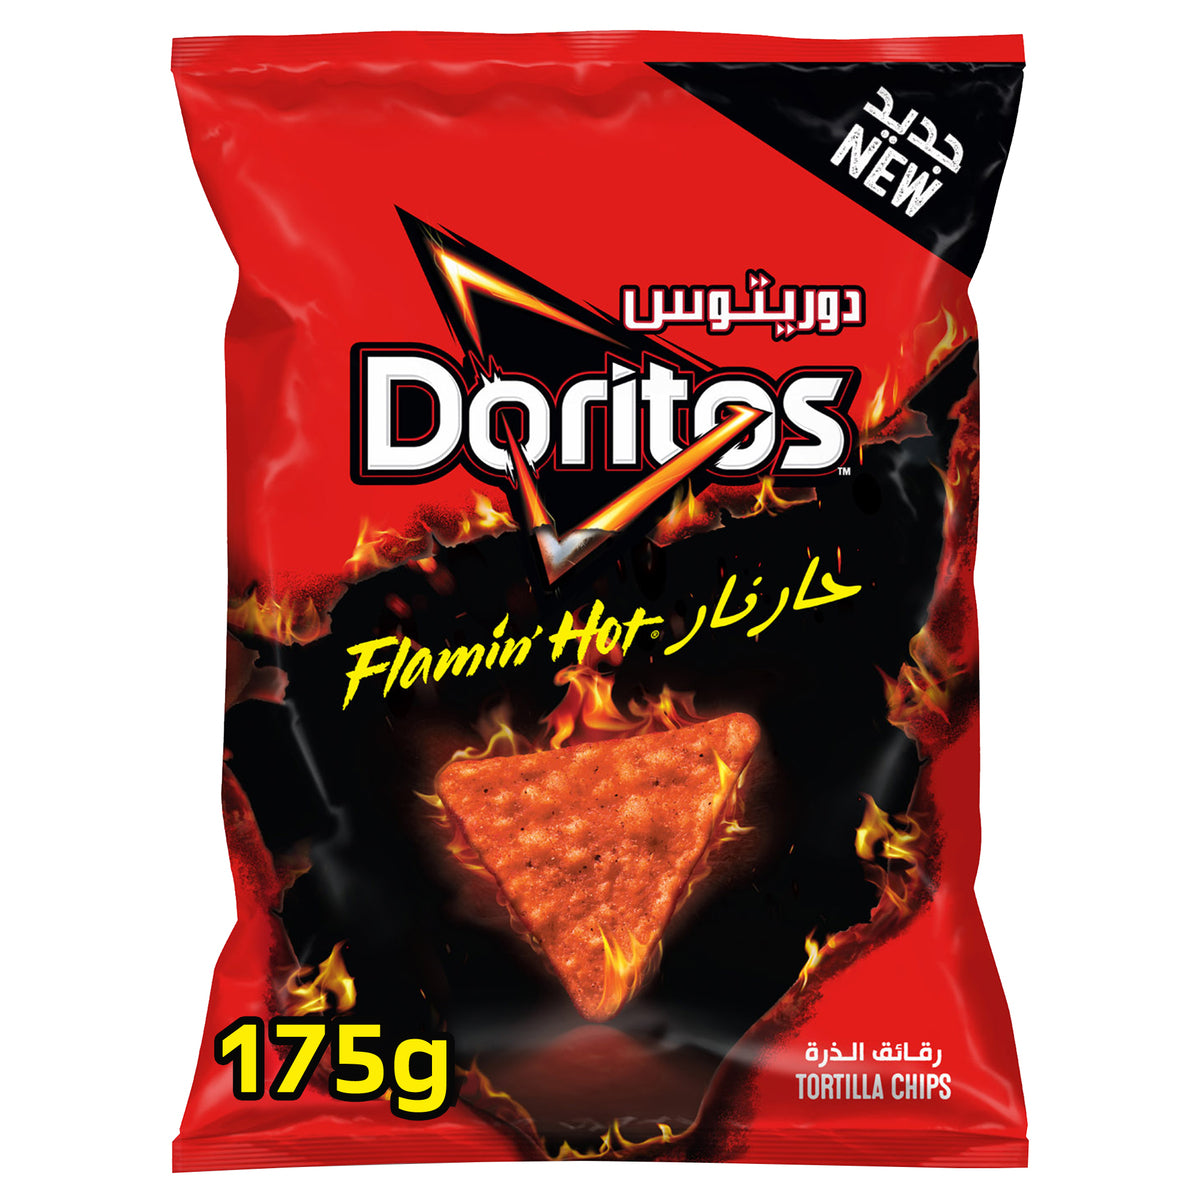 Doritos - Flamin Hot - Flavored Tortilla Chips - 175 gm (Pack of 4)